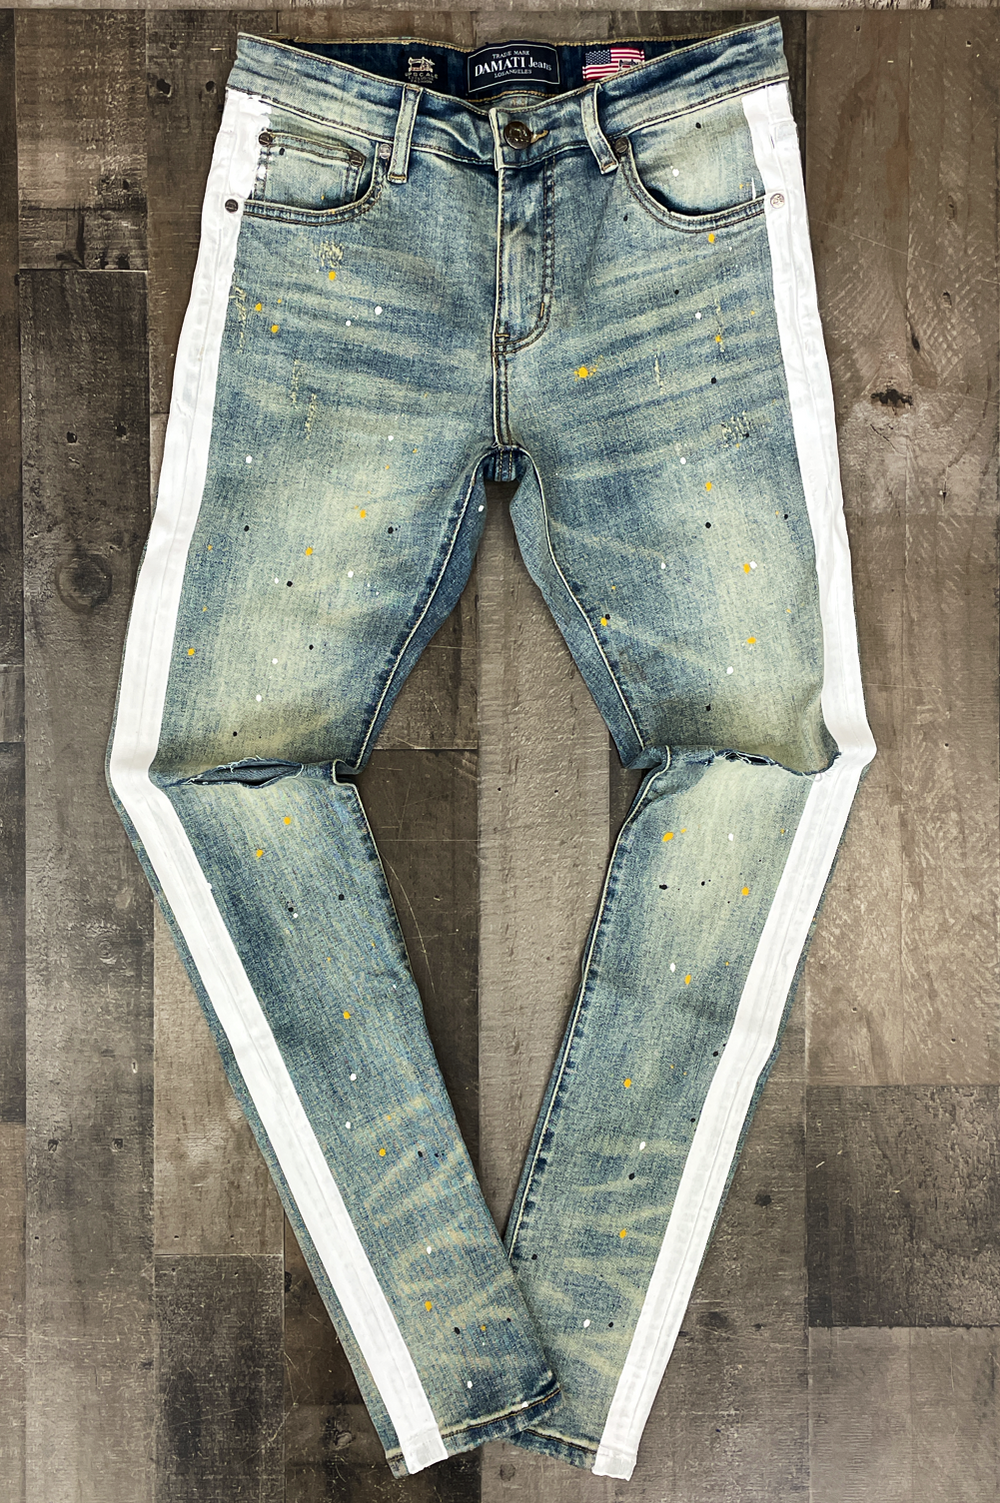 Damati- splatter paint w/ white stripe jeans